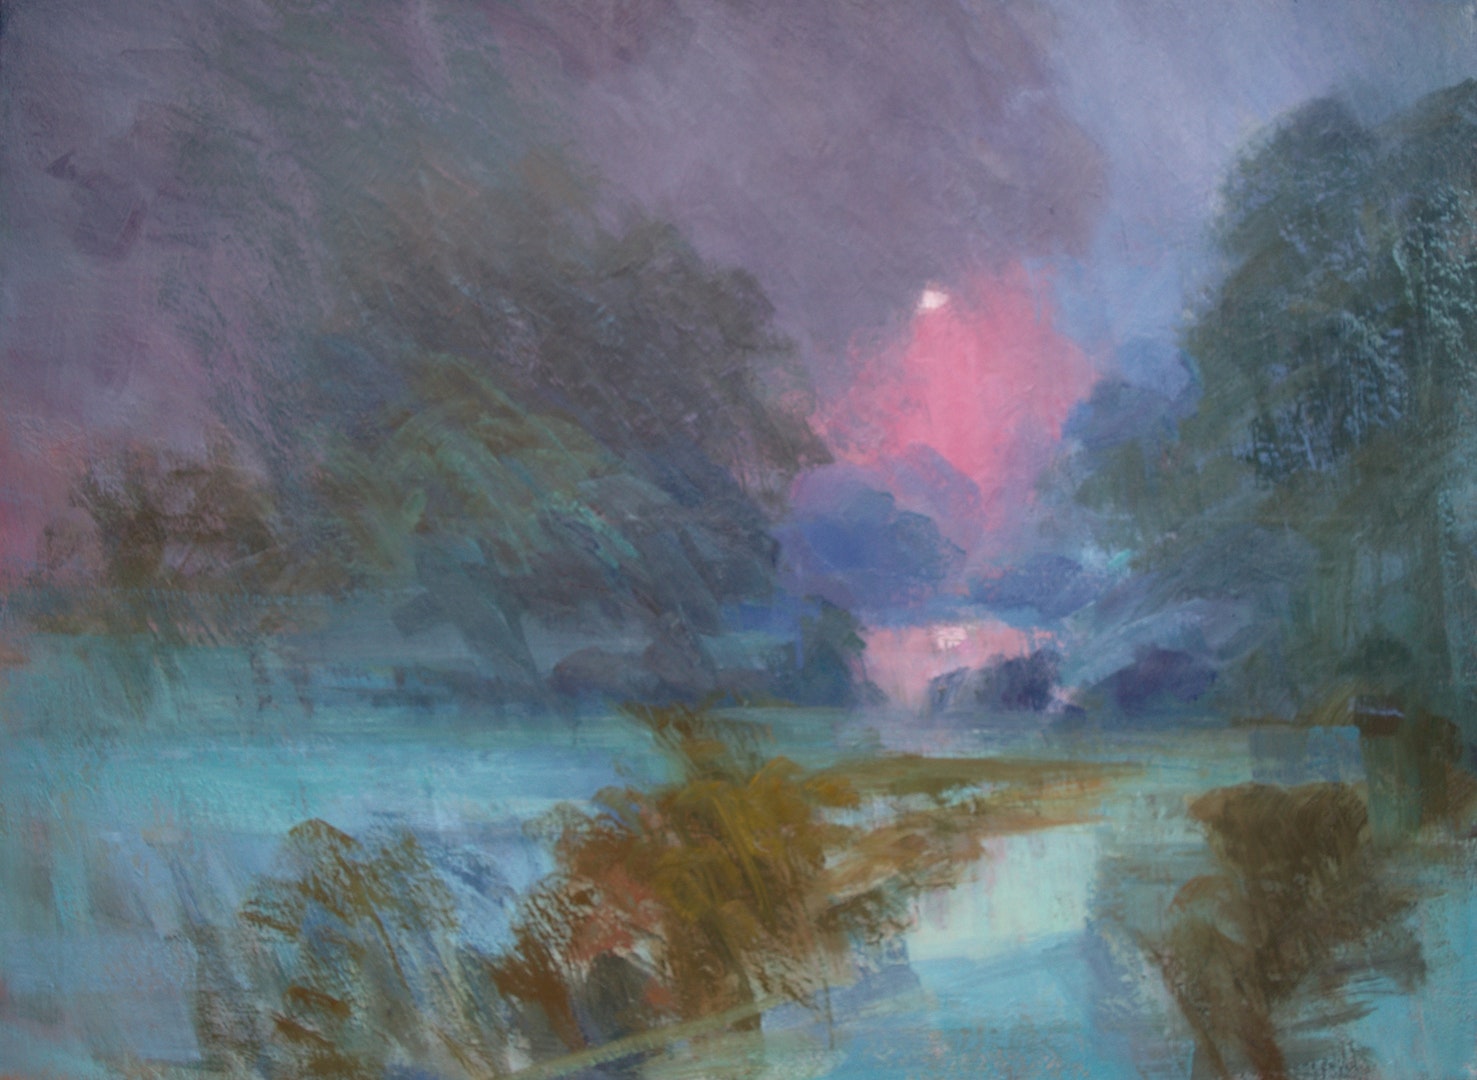 'Emerging sunlight', David Paul, Oil on canvas, 92 x 122 cm